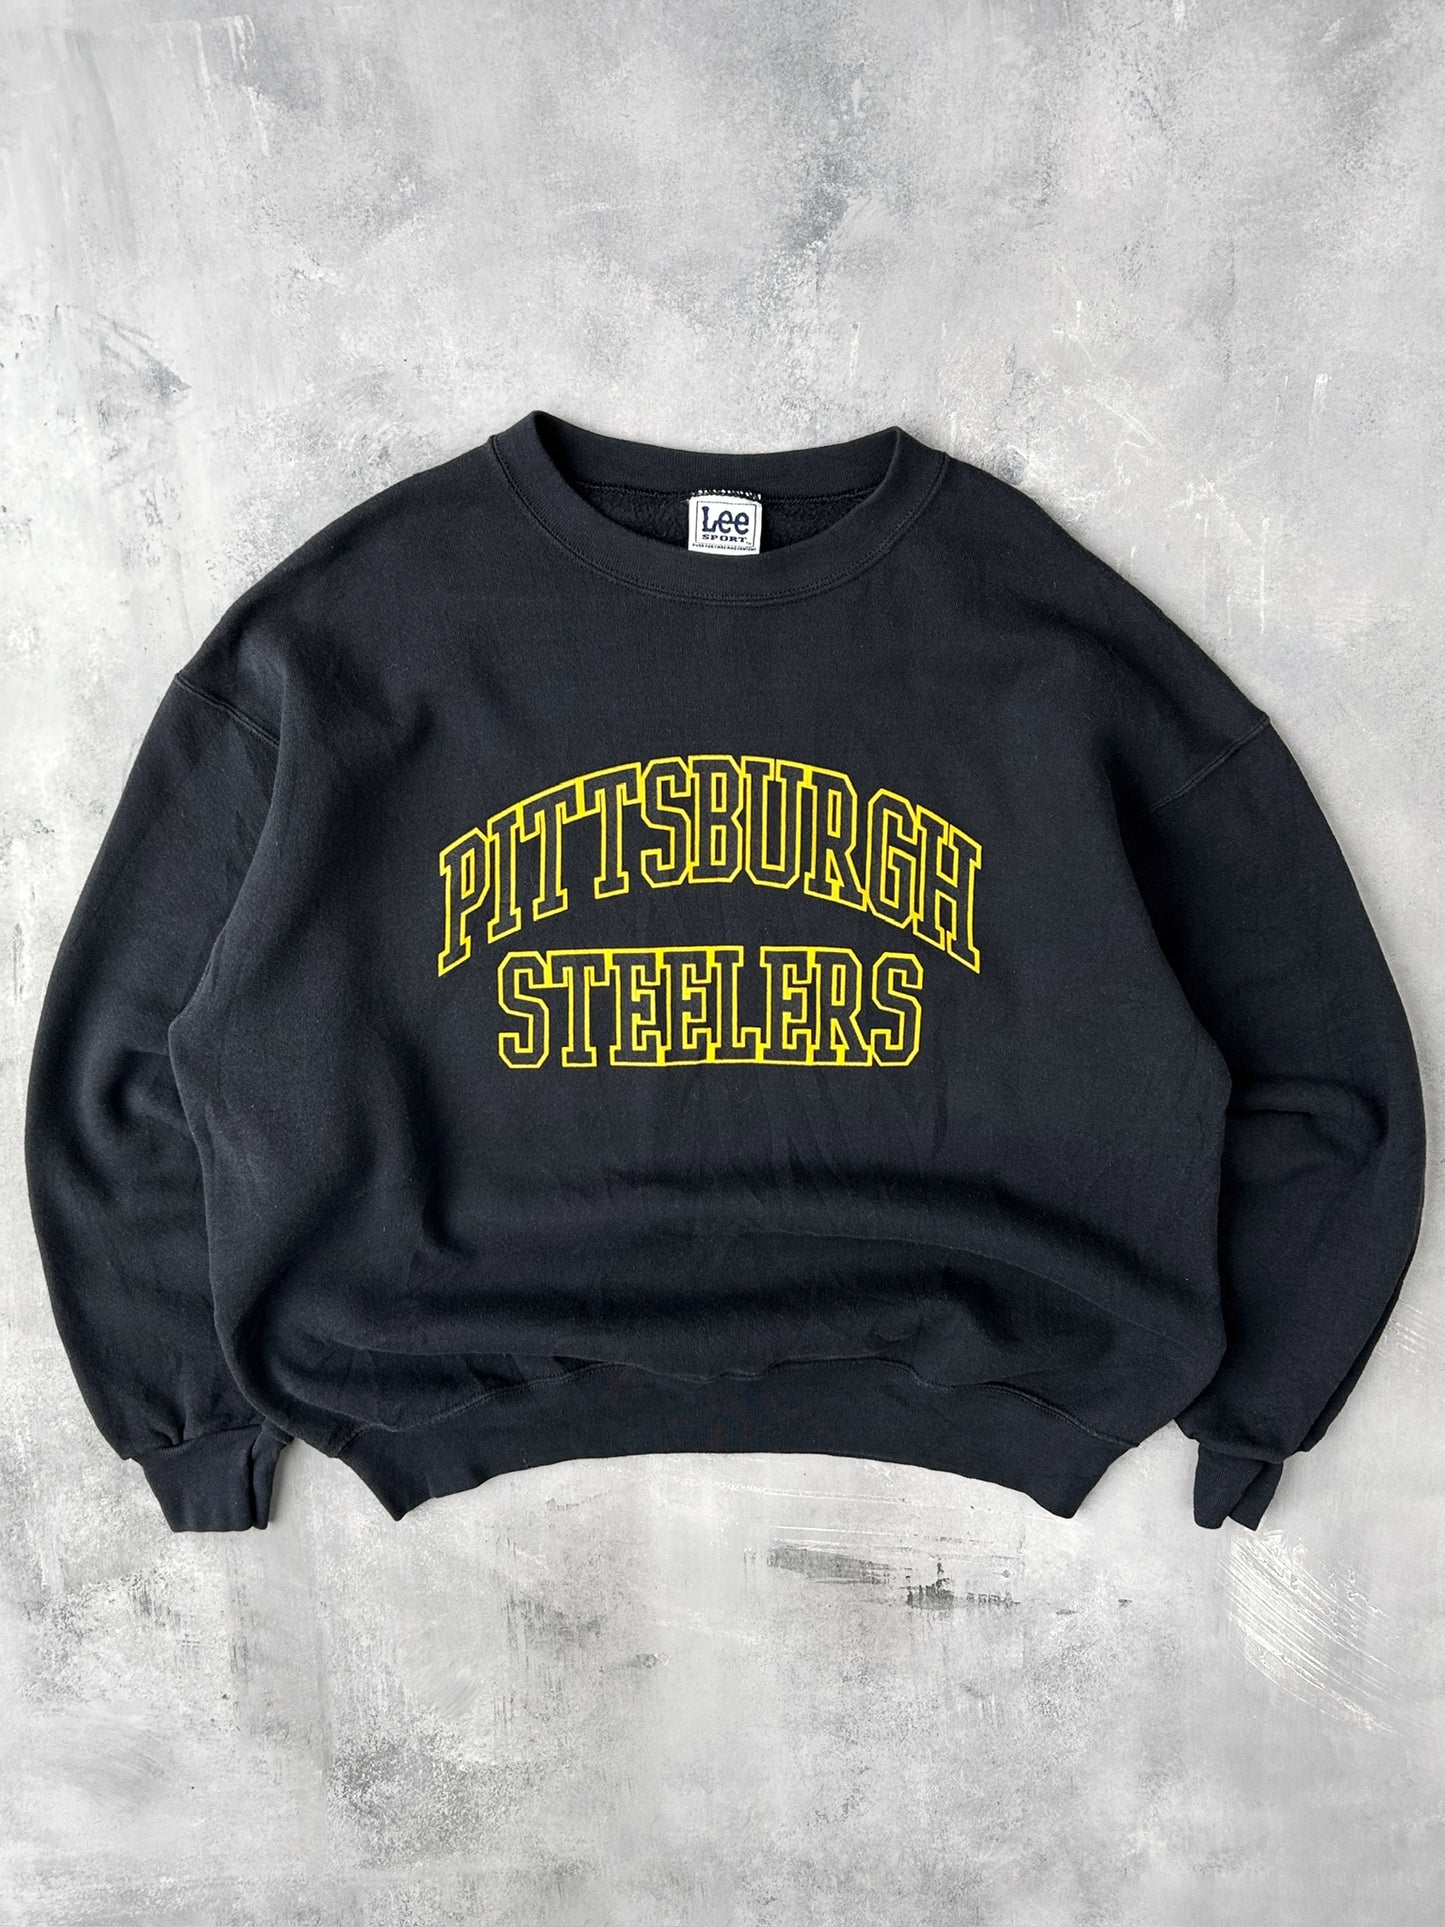 Pittsburgh Steelers Sweatshirt 90's - Large